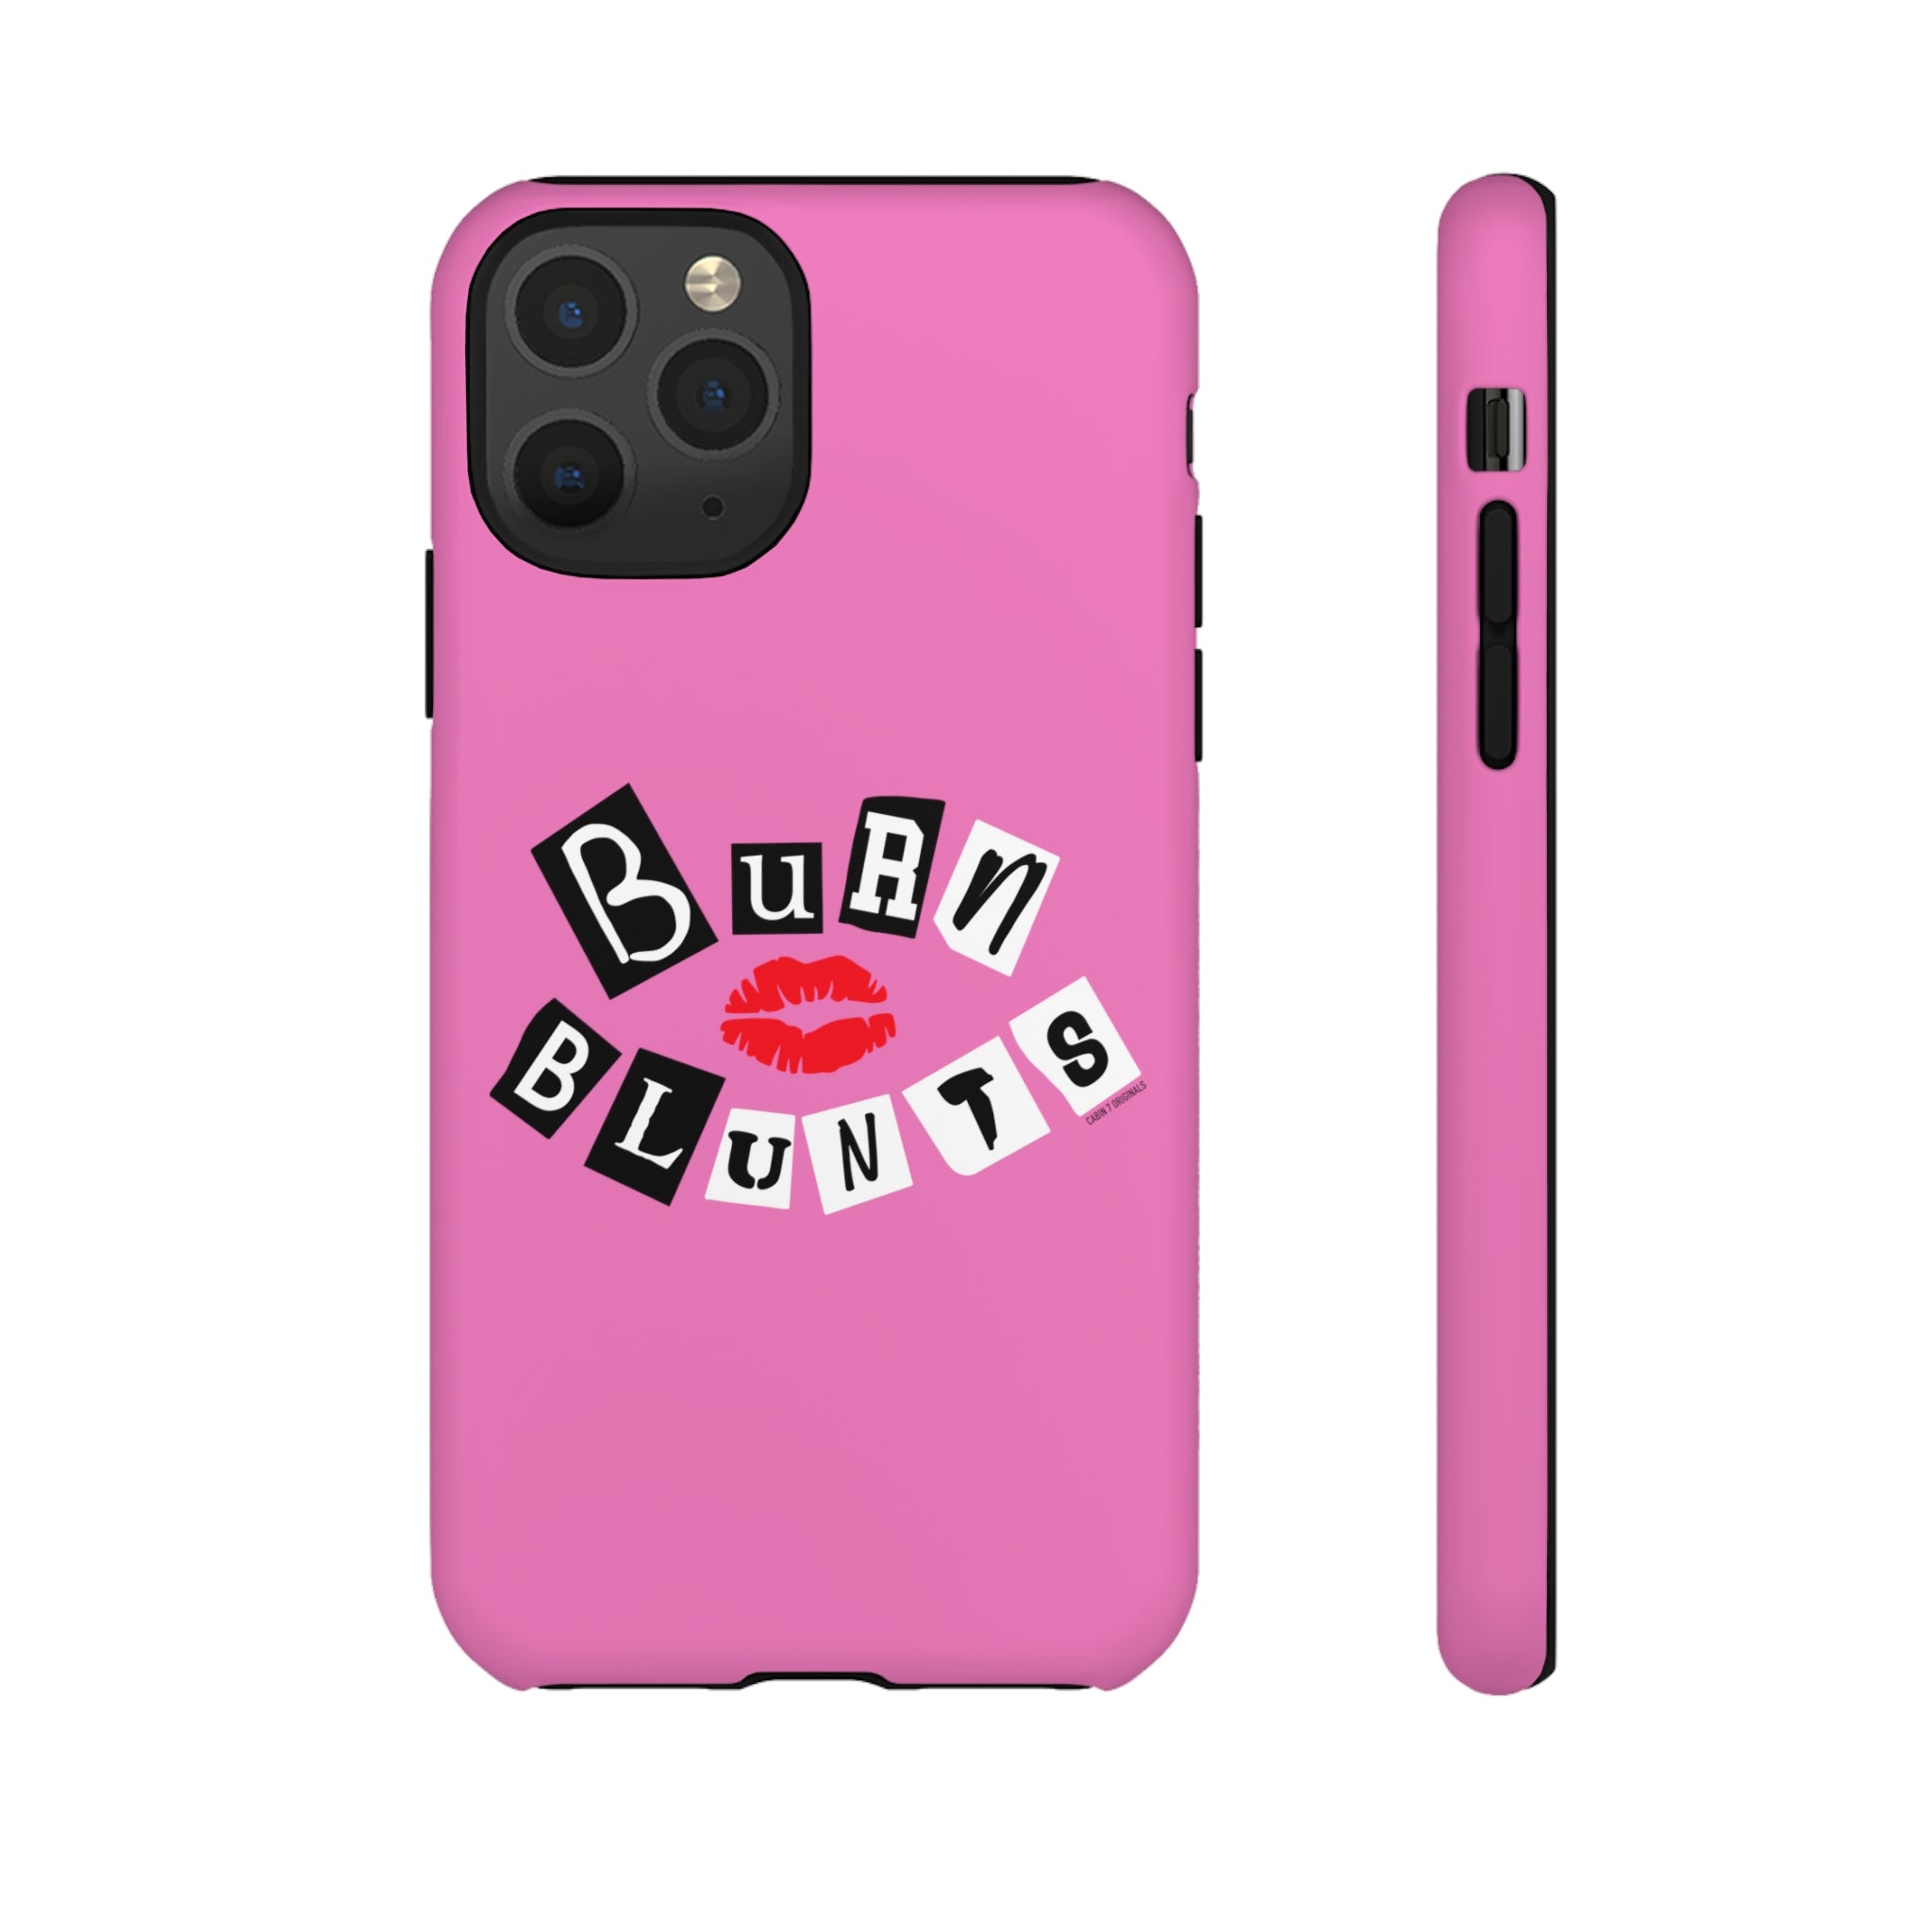 Burn Blunts Phone Case